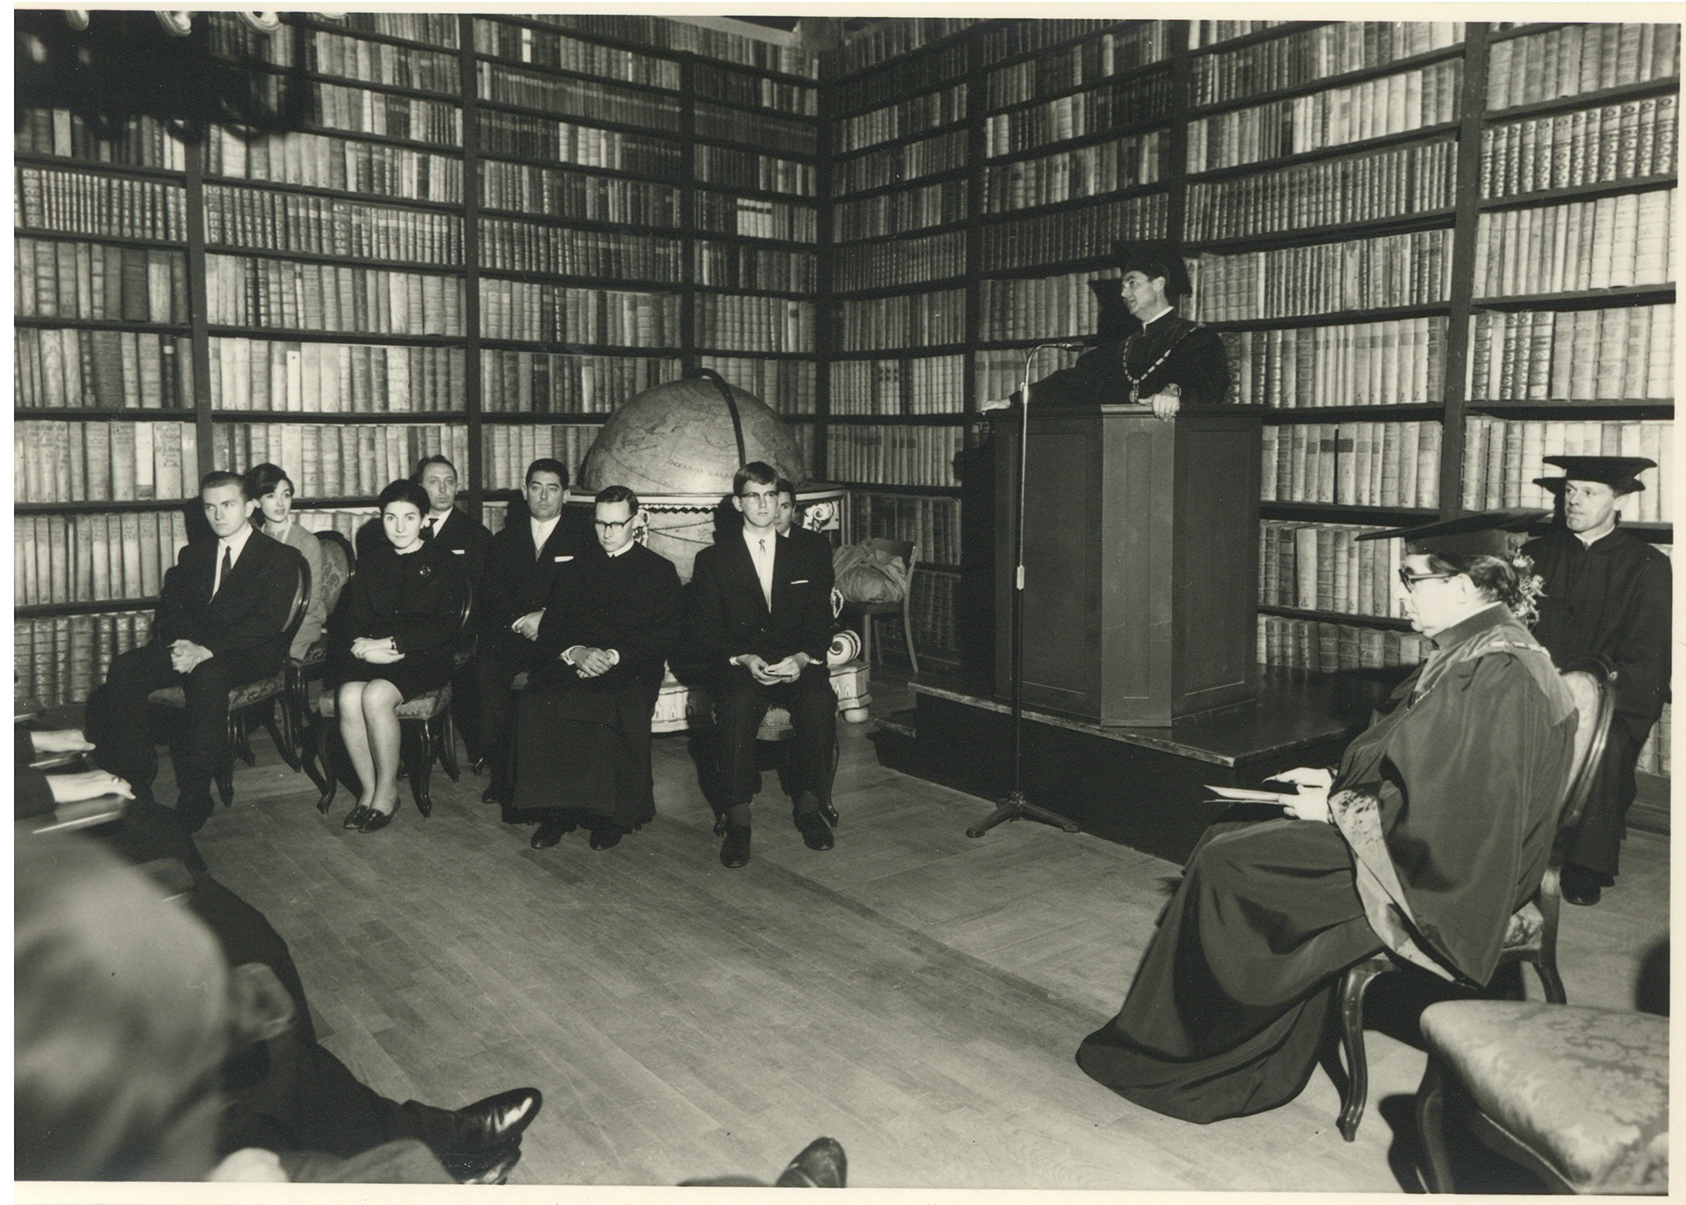 Doctoral graduation ceremony in the Bibliotheksaula 15.12.1967